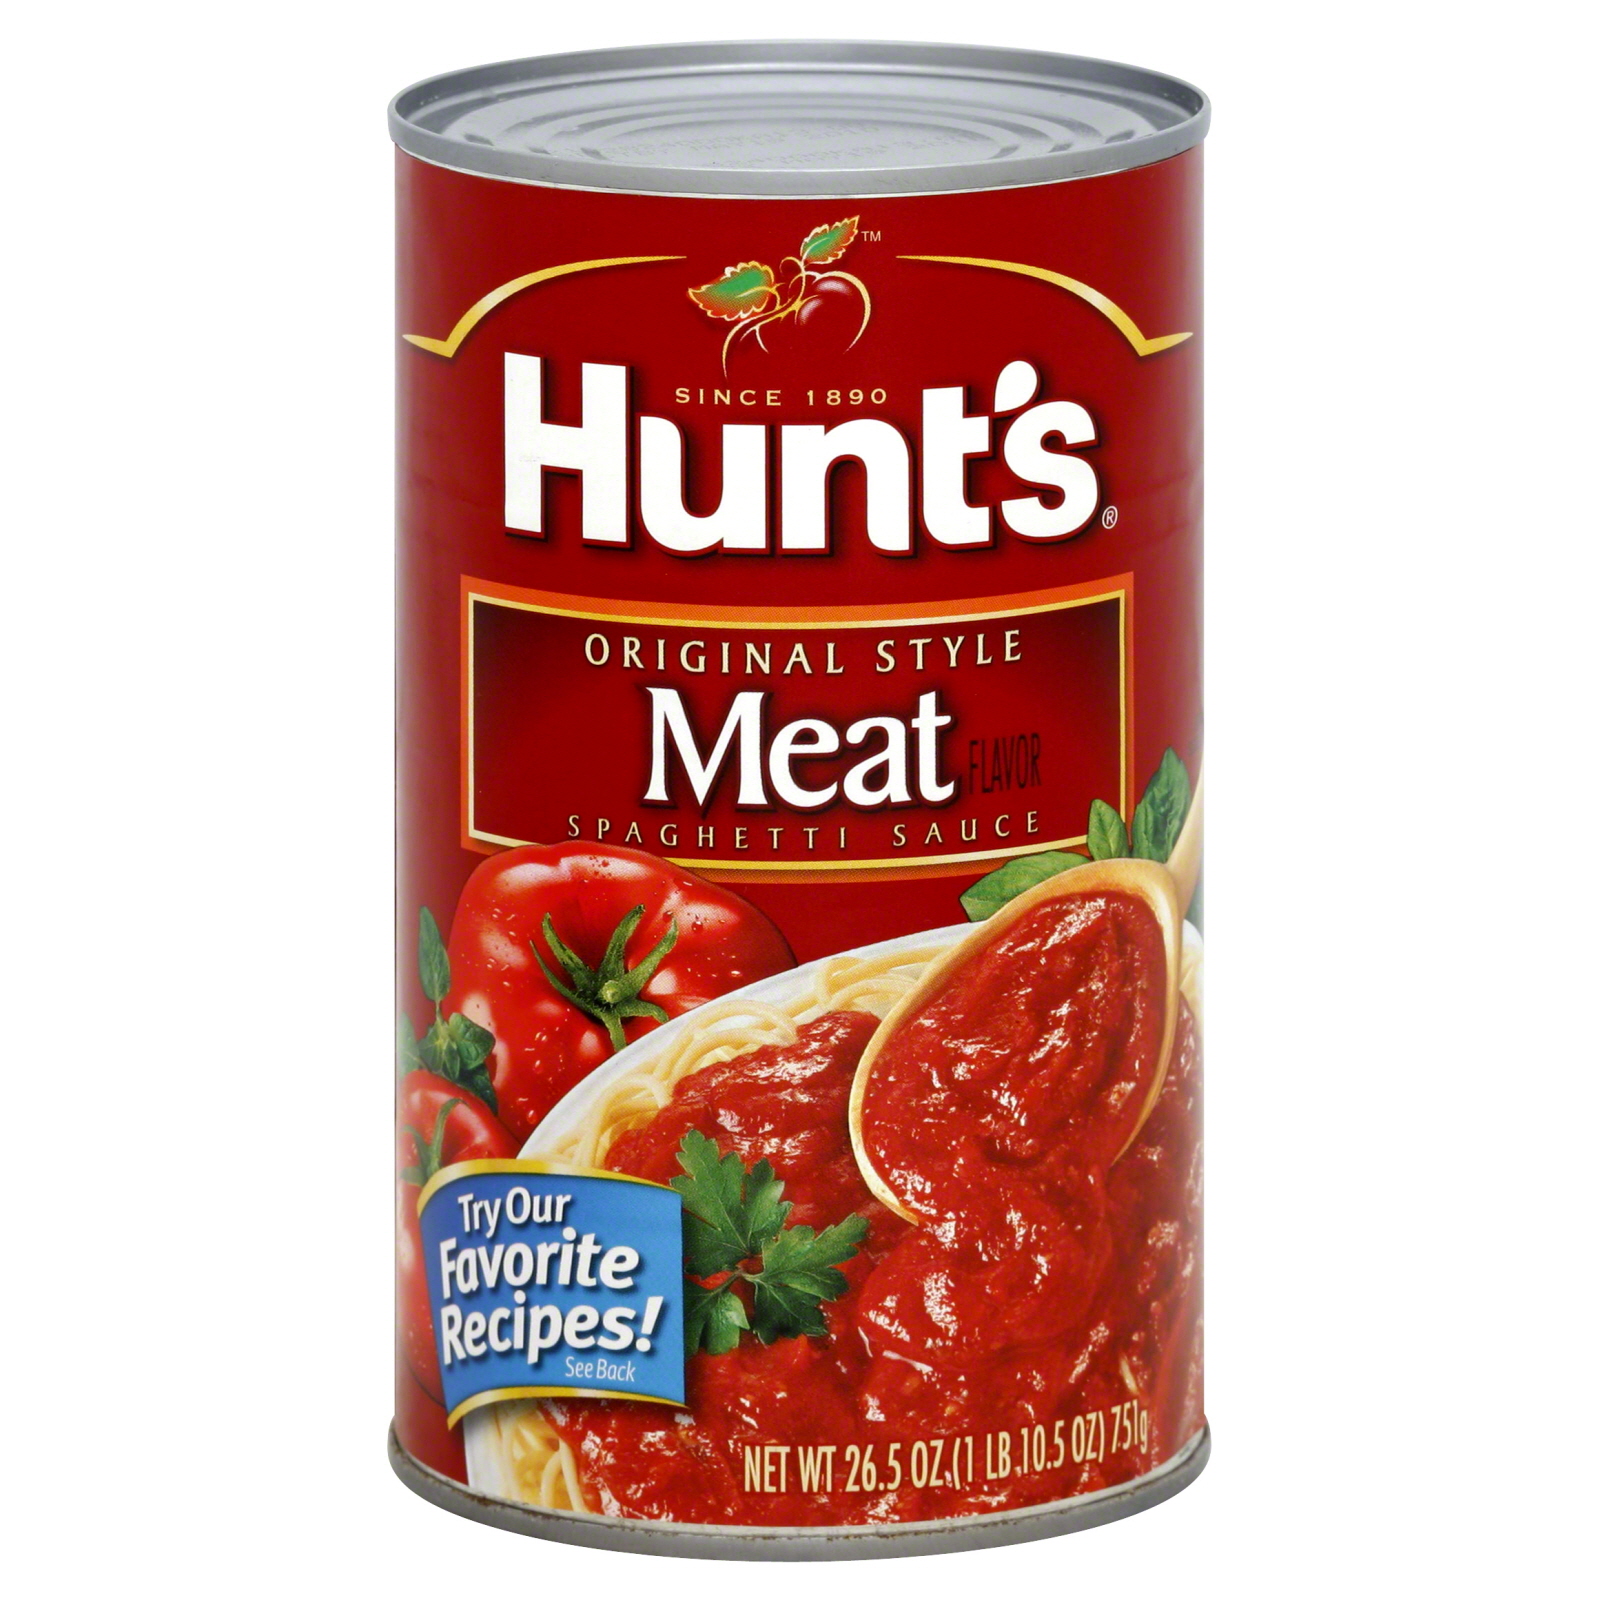 Hunt's Spaghetti Sauce, Original Style, Meat Flavor, 26.5 oz (1 lb 10.5 oz) 751 g